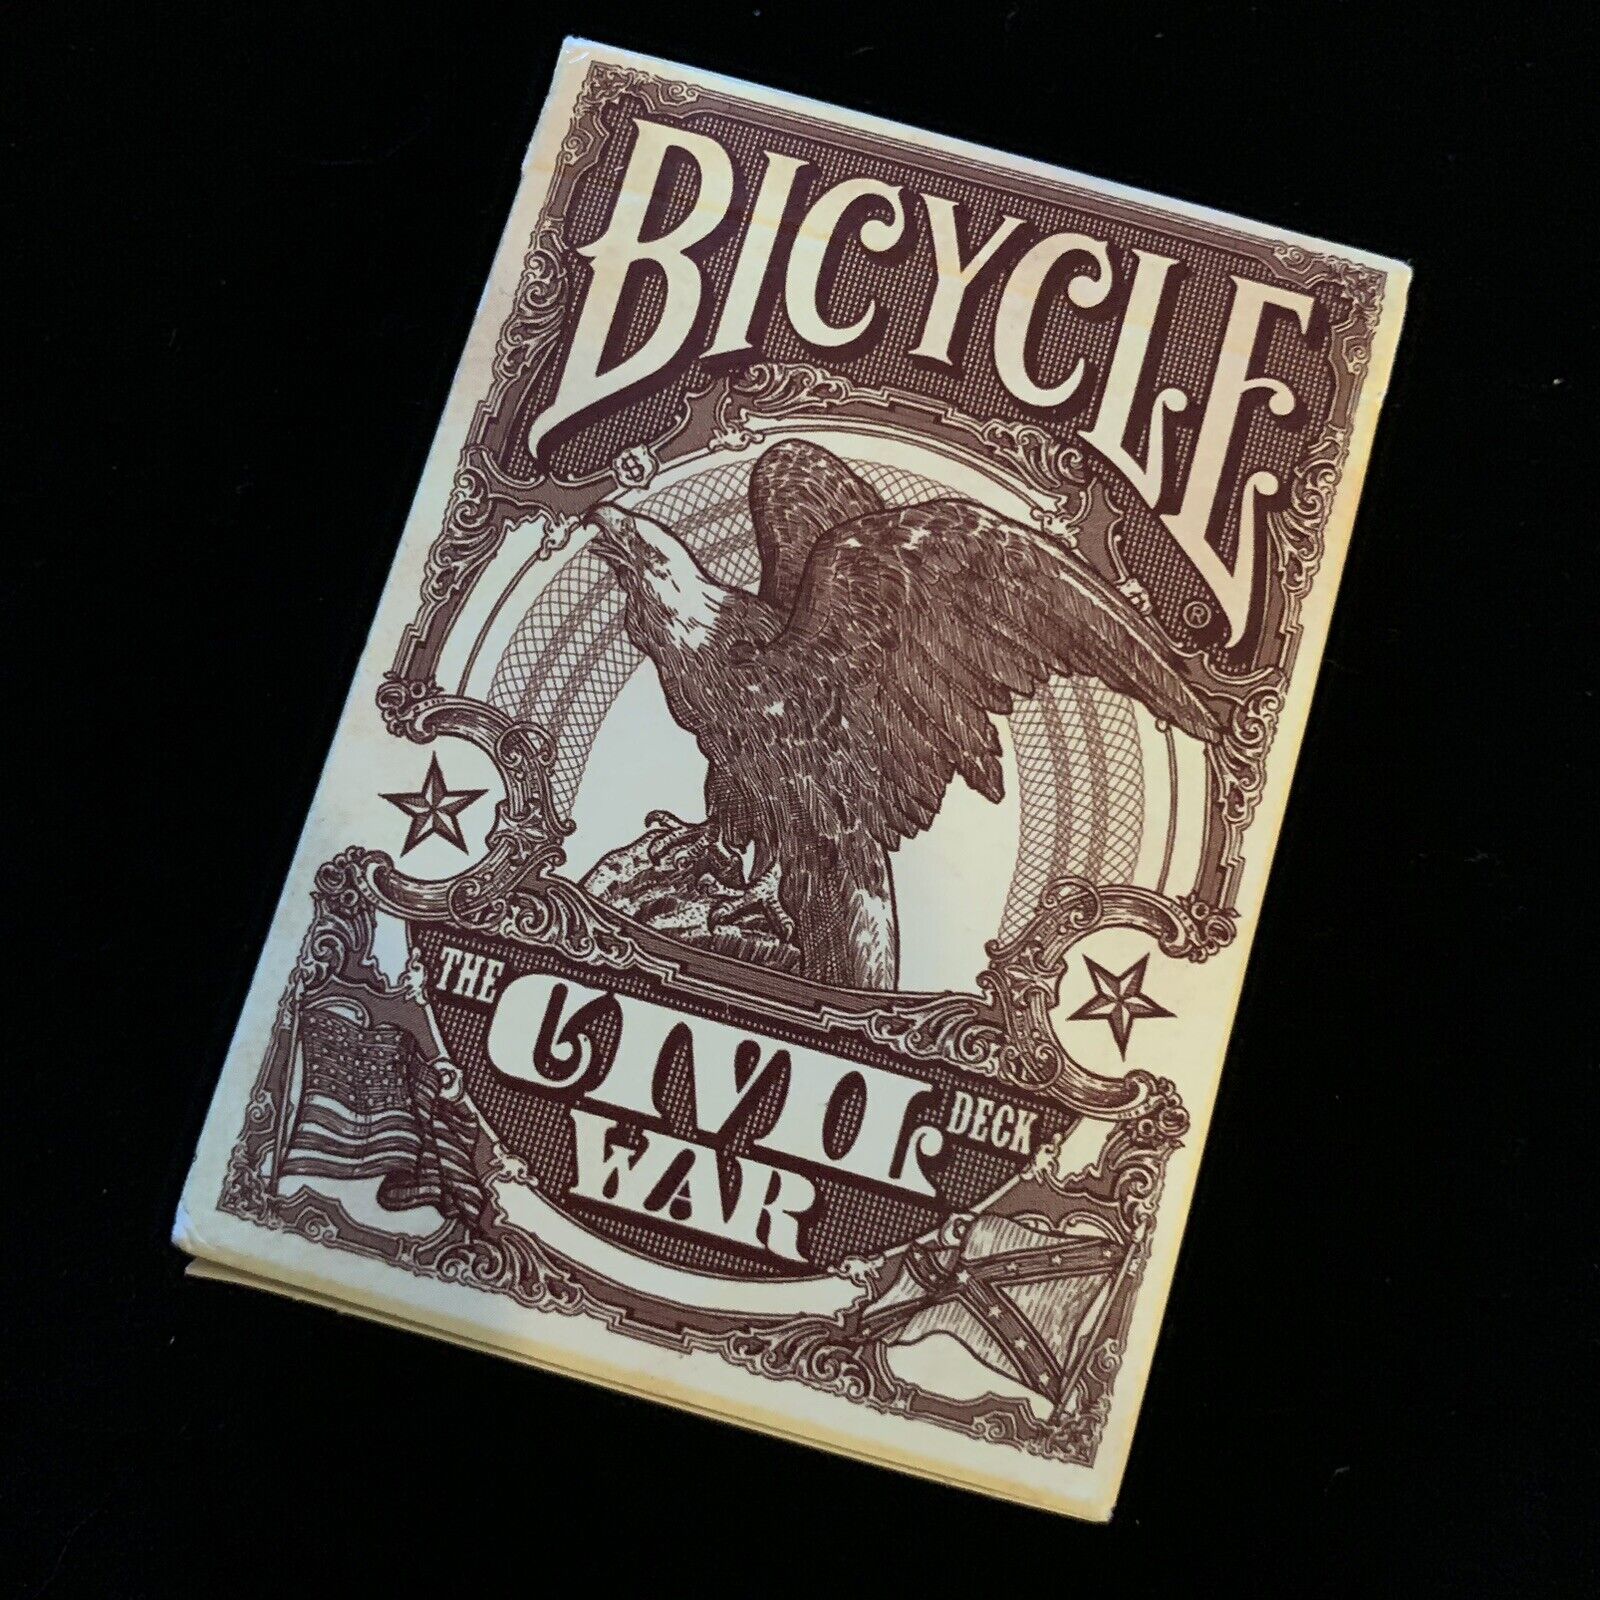 Bicycle The Civil War Deck Jackson Robinson Design Kings Wild Project 2014 USA